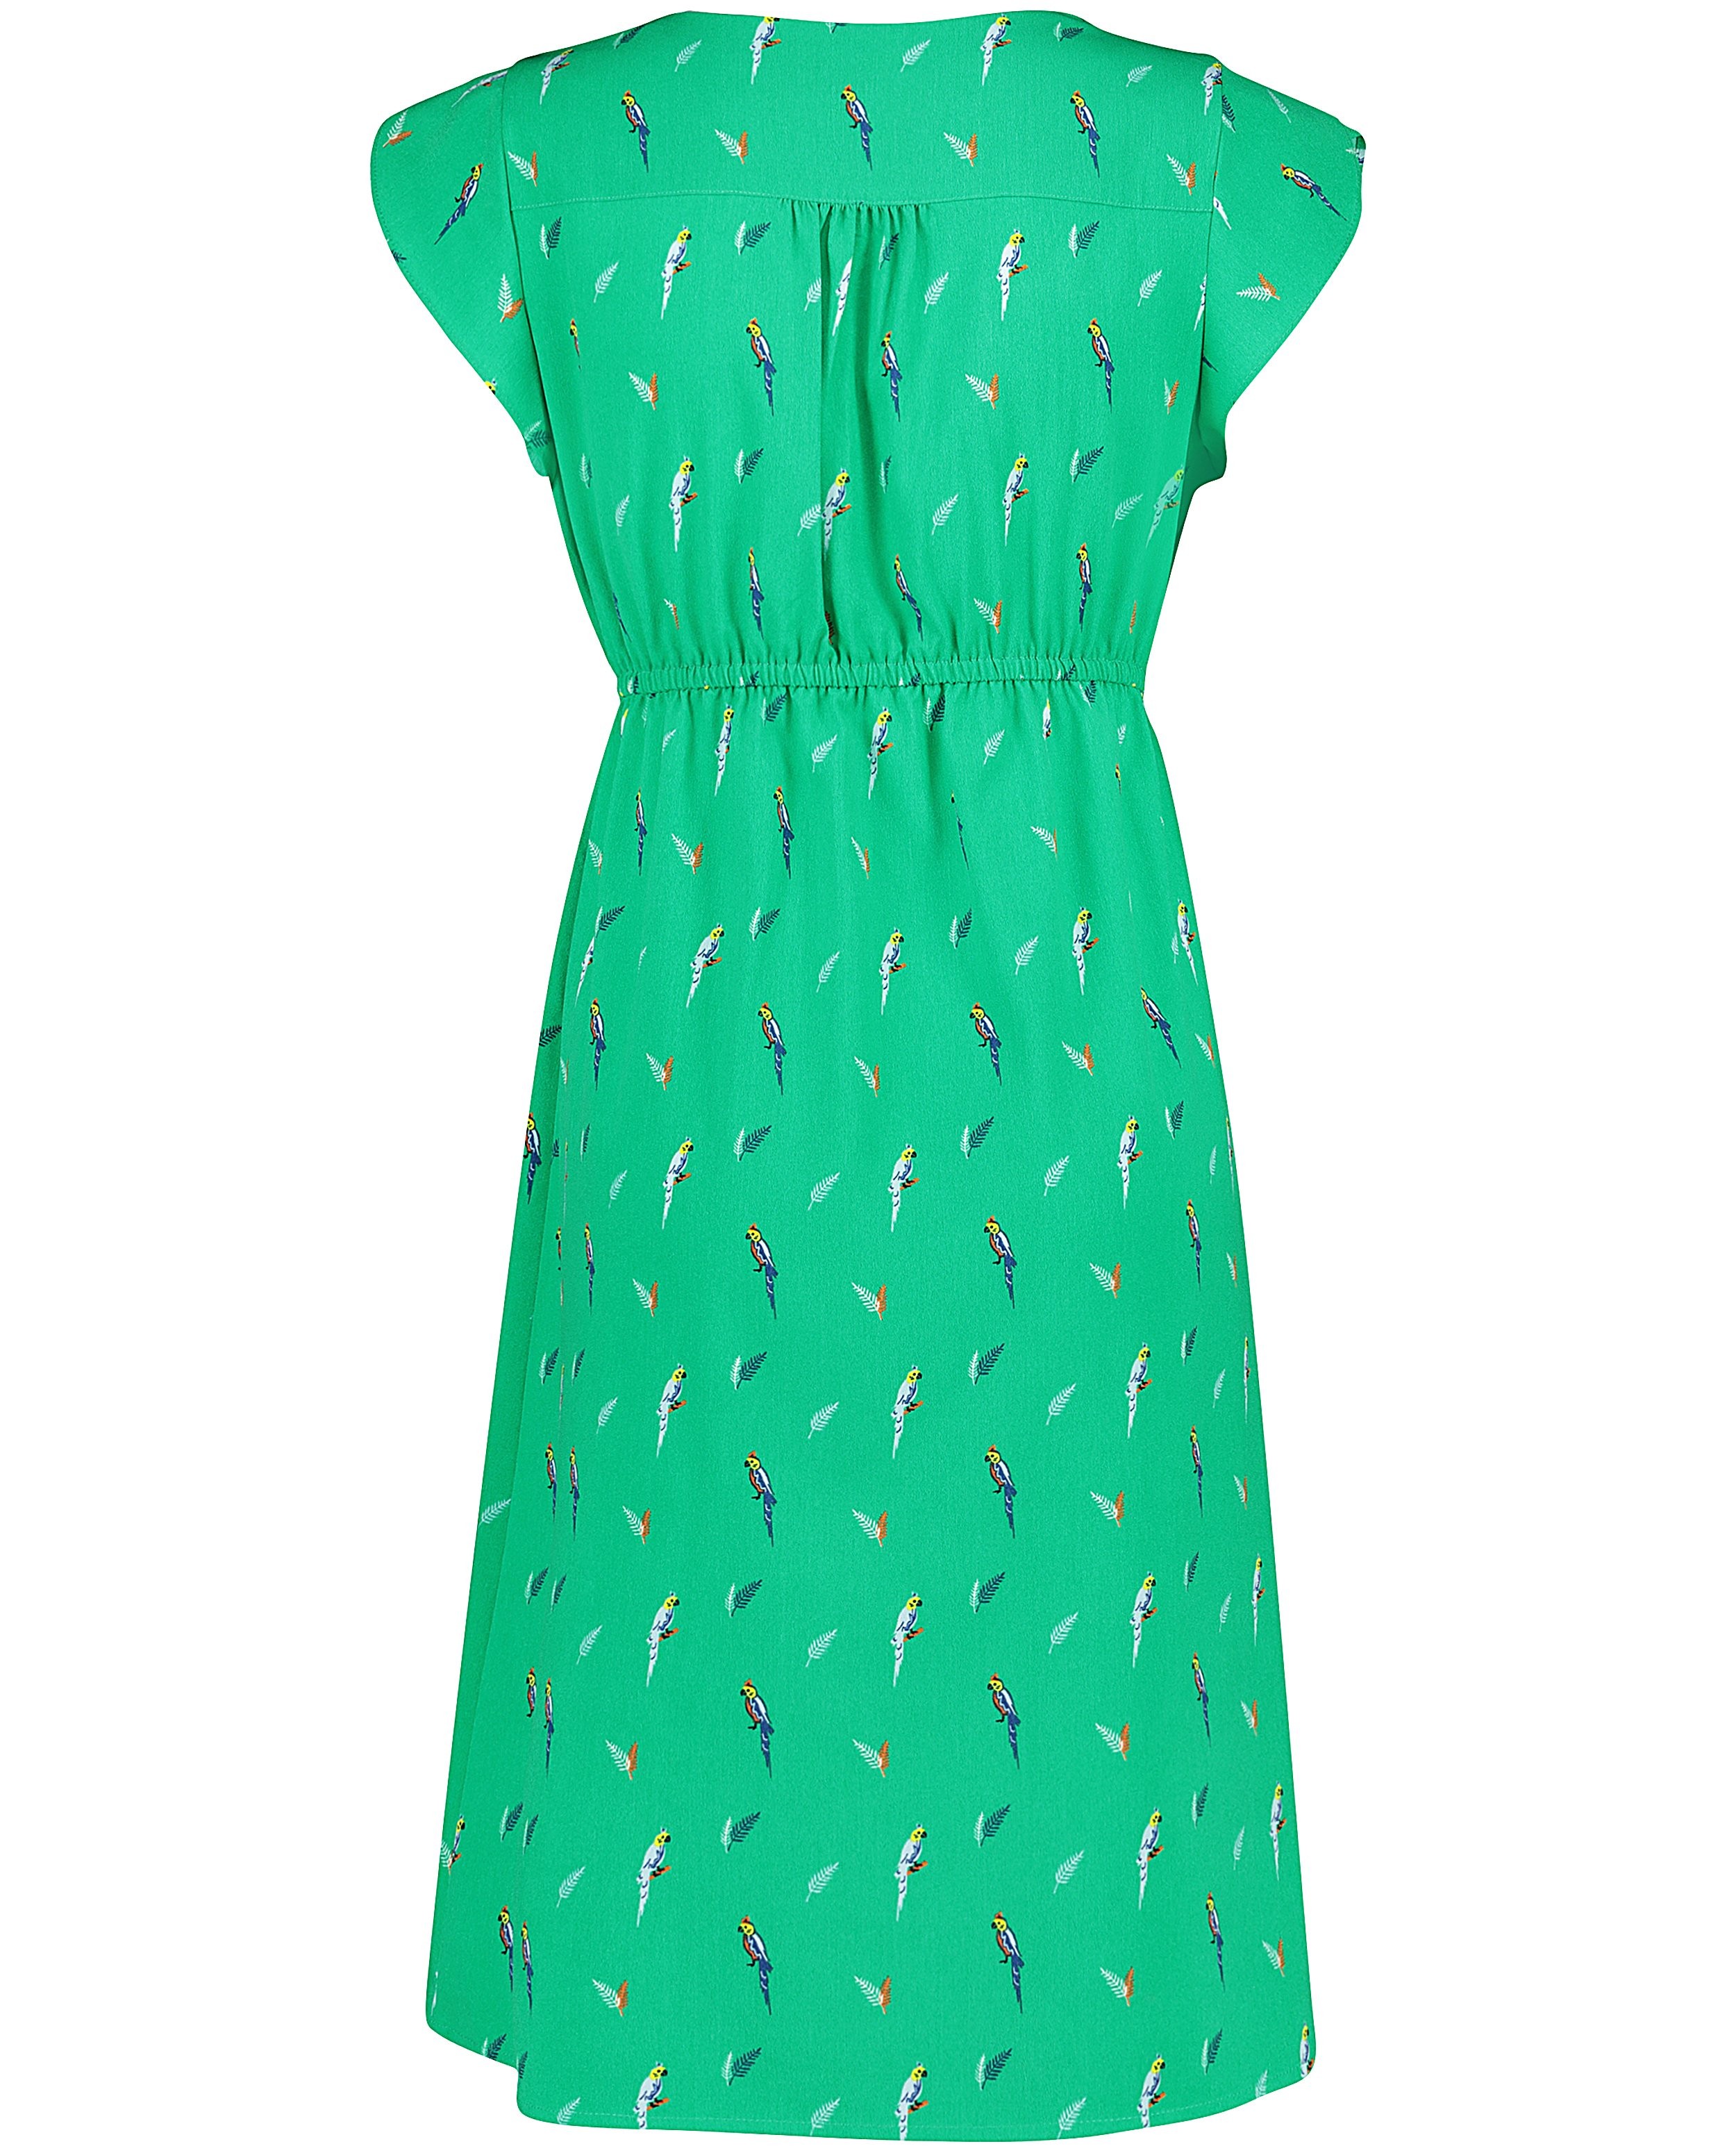 Kleedjes - Groene jurk met allover print JoliRonde